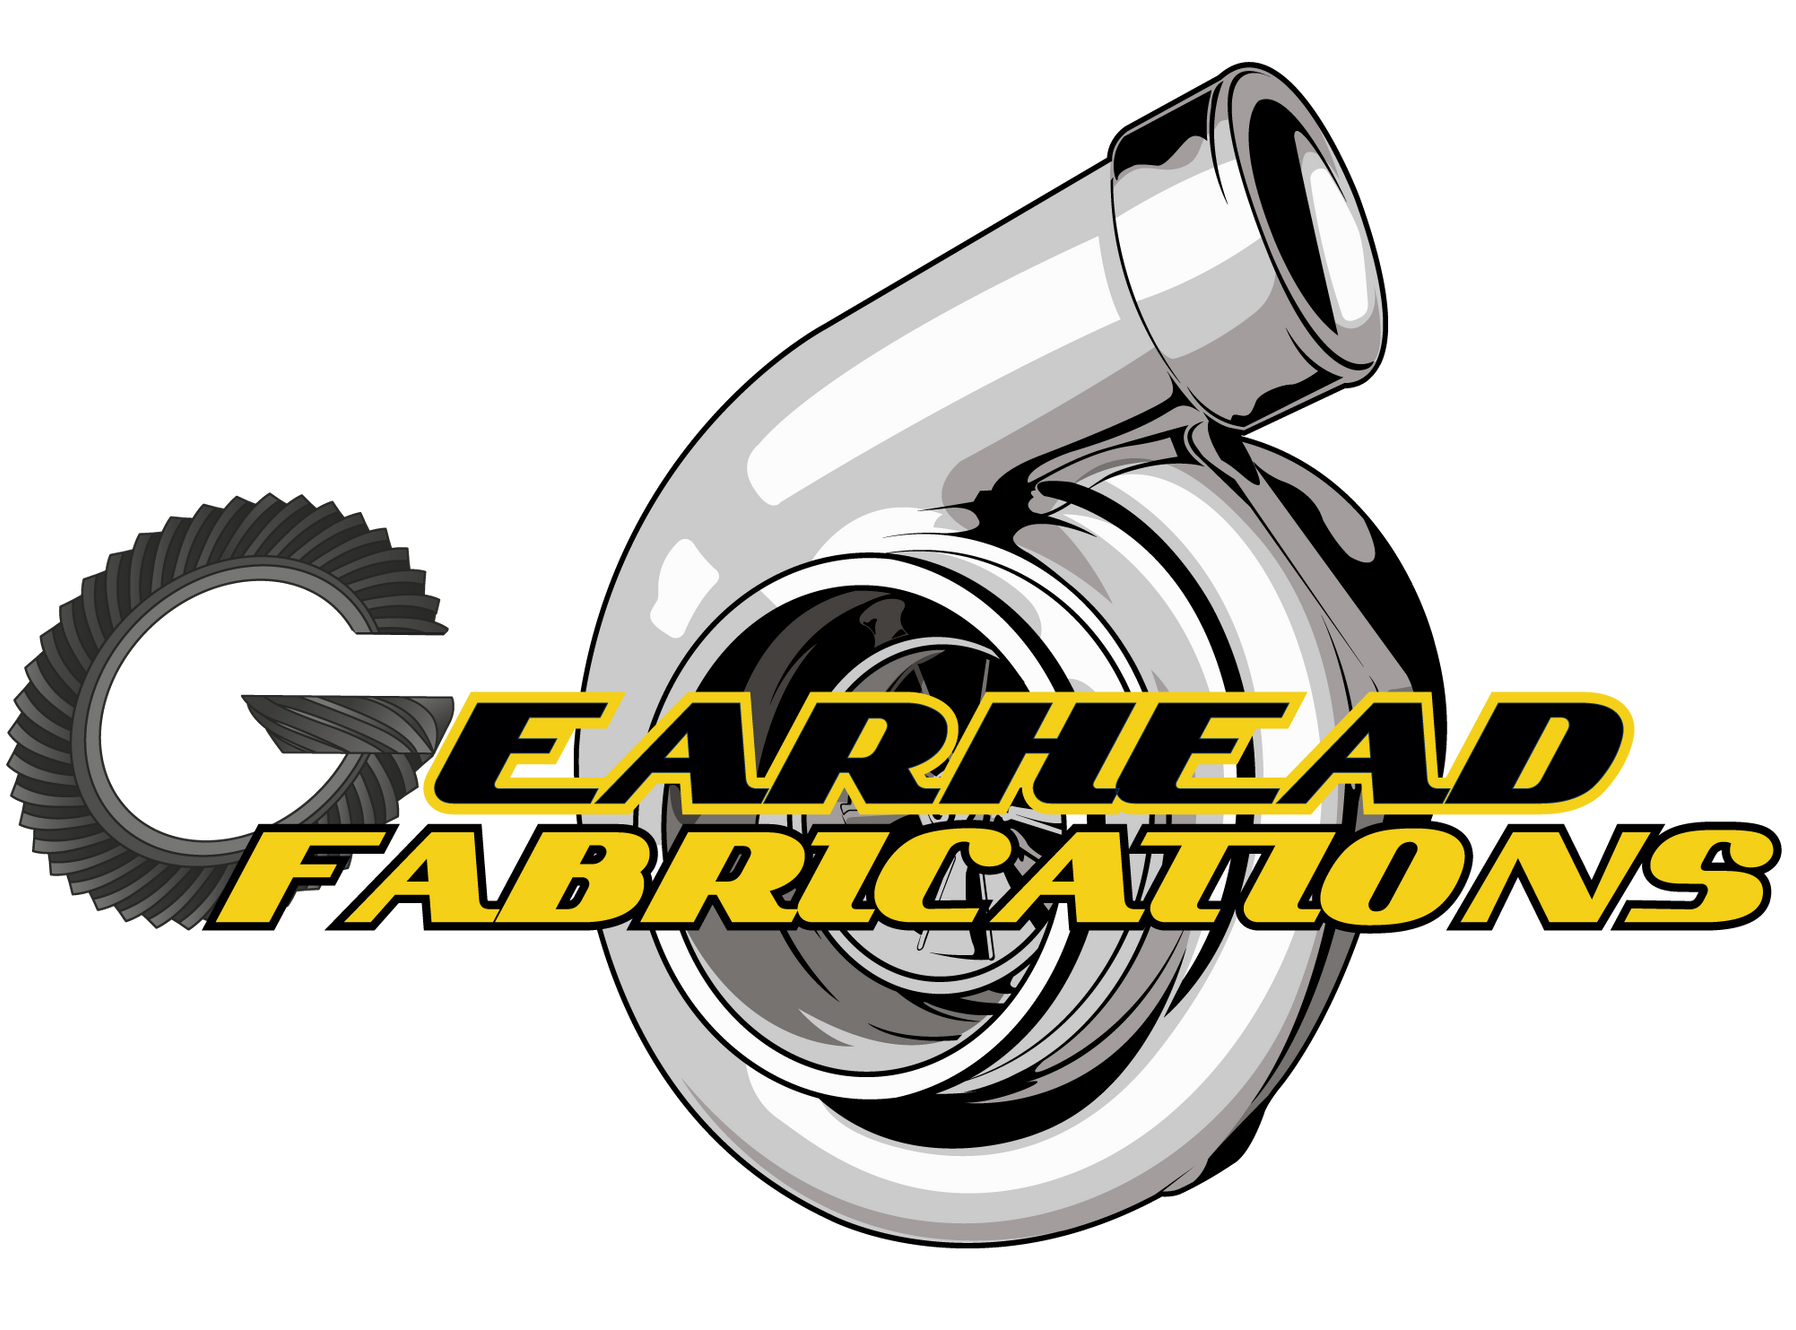 www.gearheadfabrications.com